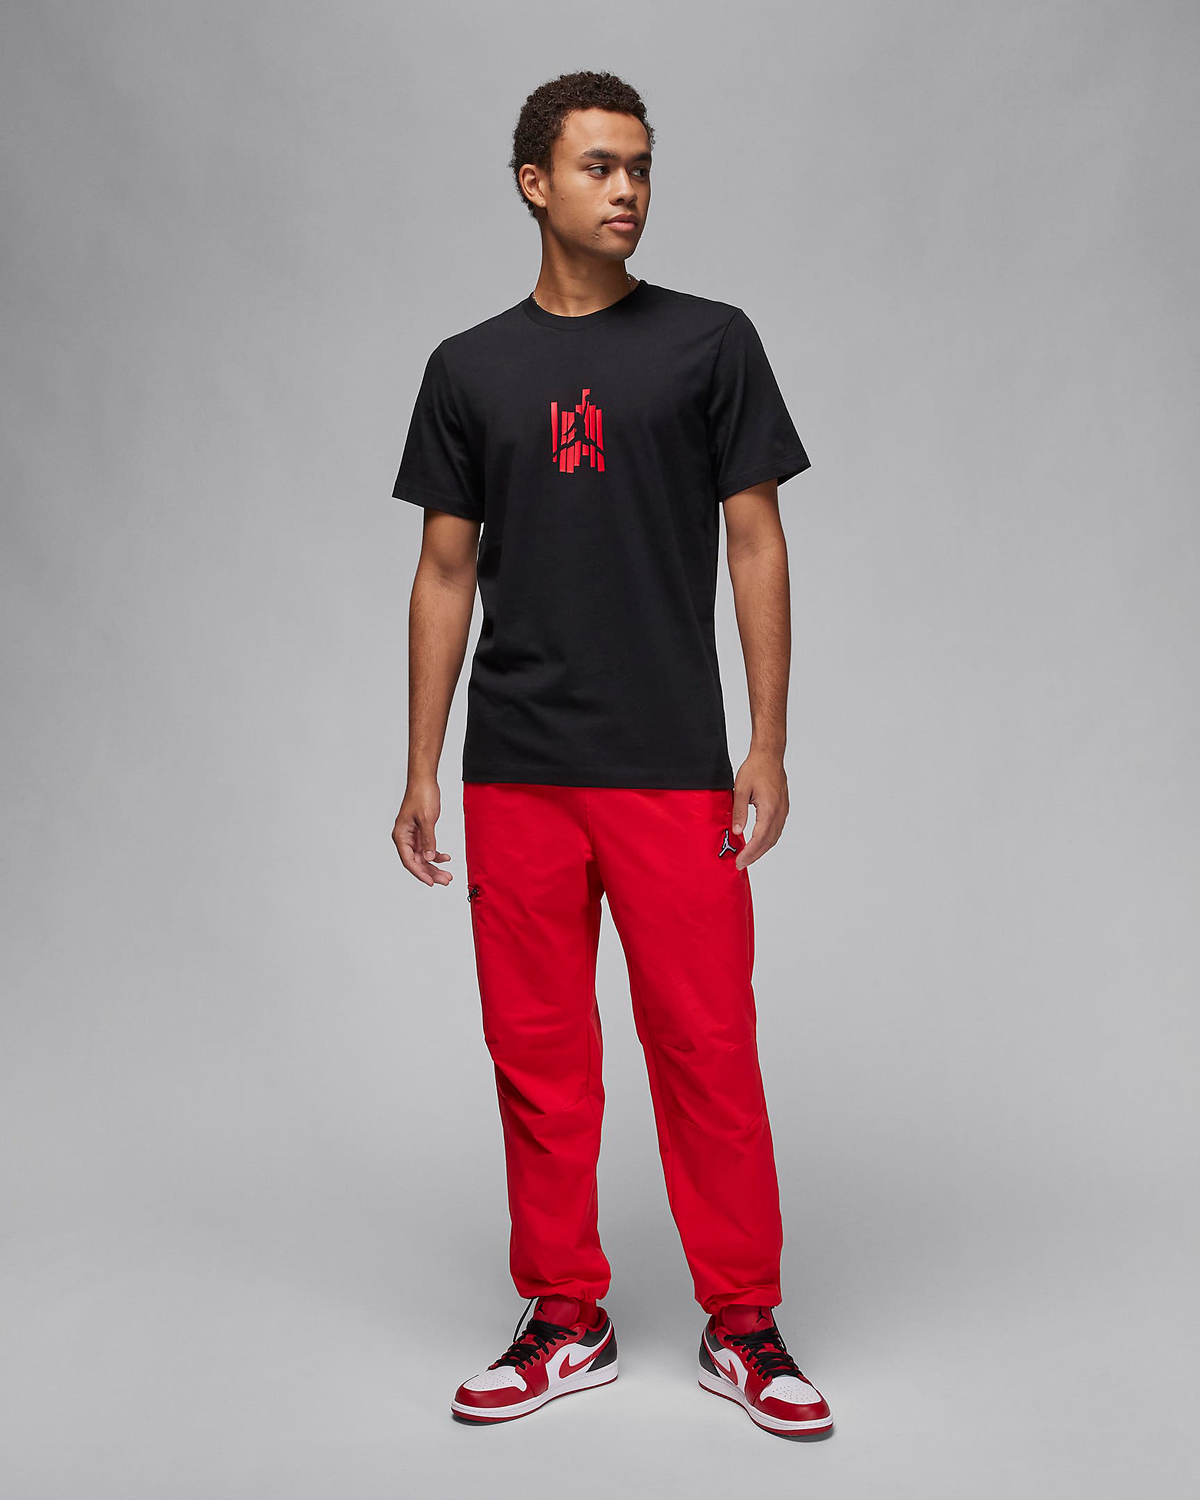 Jordan-Brand-Graphic-T-Shirt-Black-Gym-Red-White